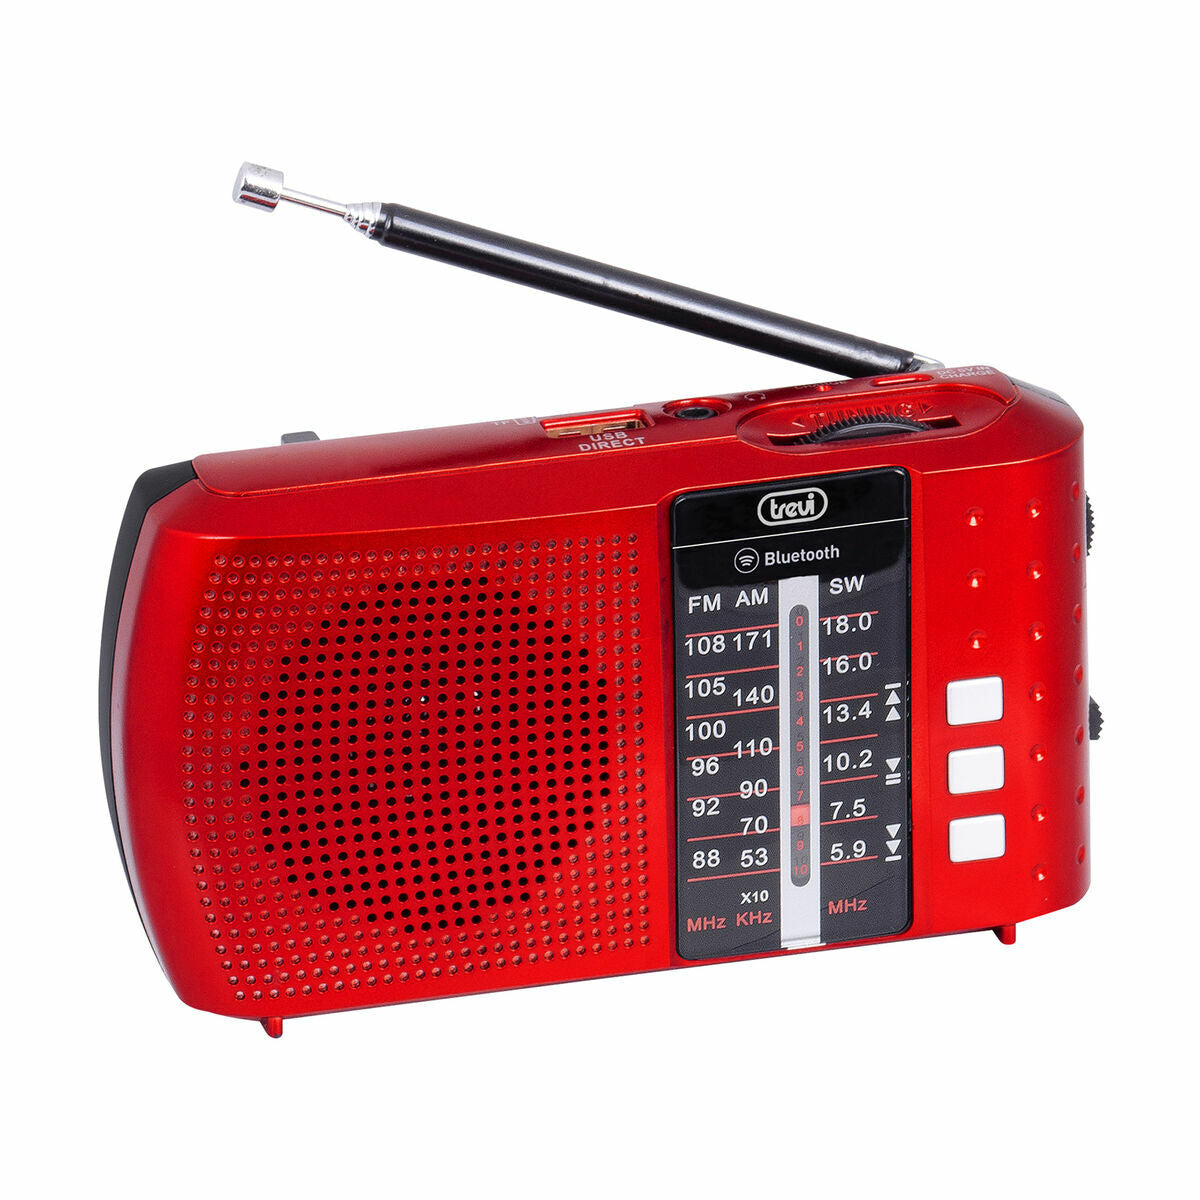 Radio Portatile Bluetooth Trevi RA 7F20 BT Rosso FM/AM/SW